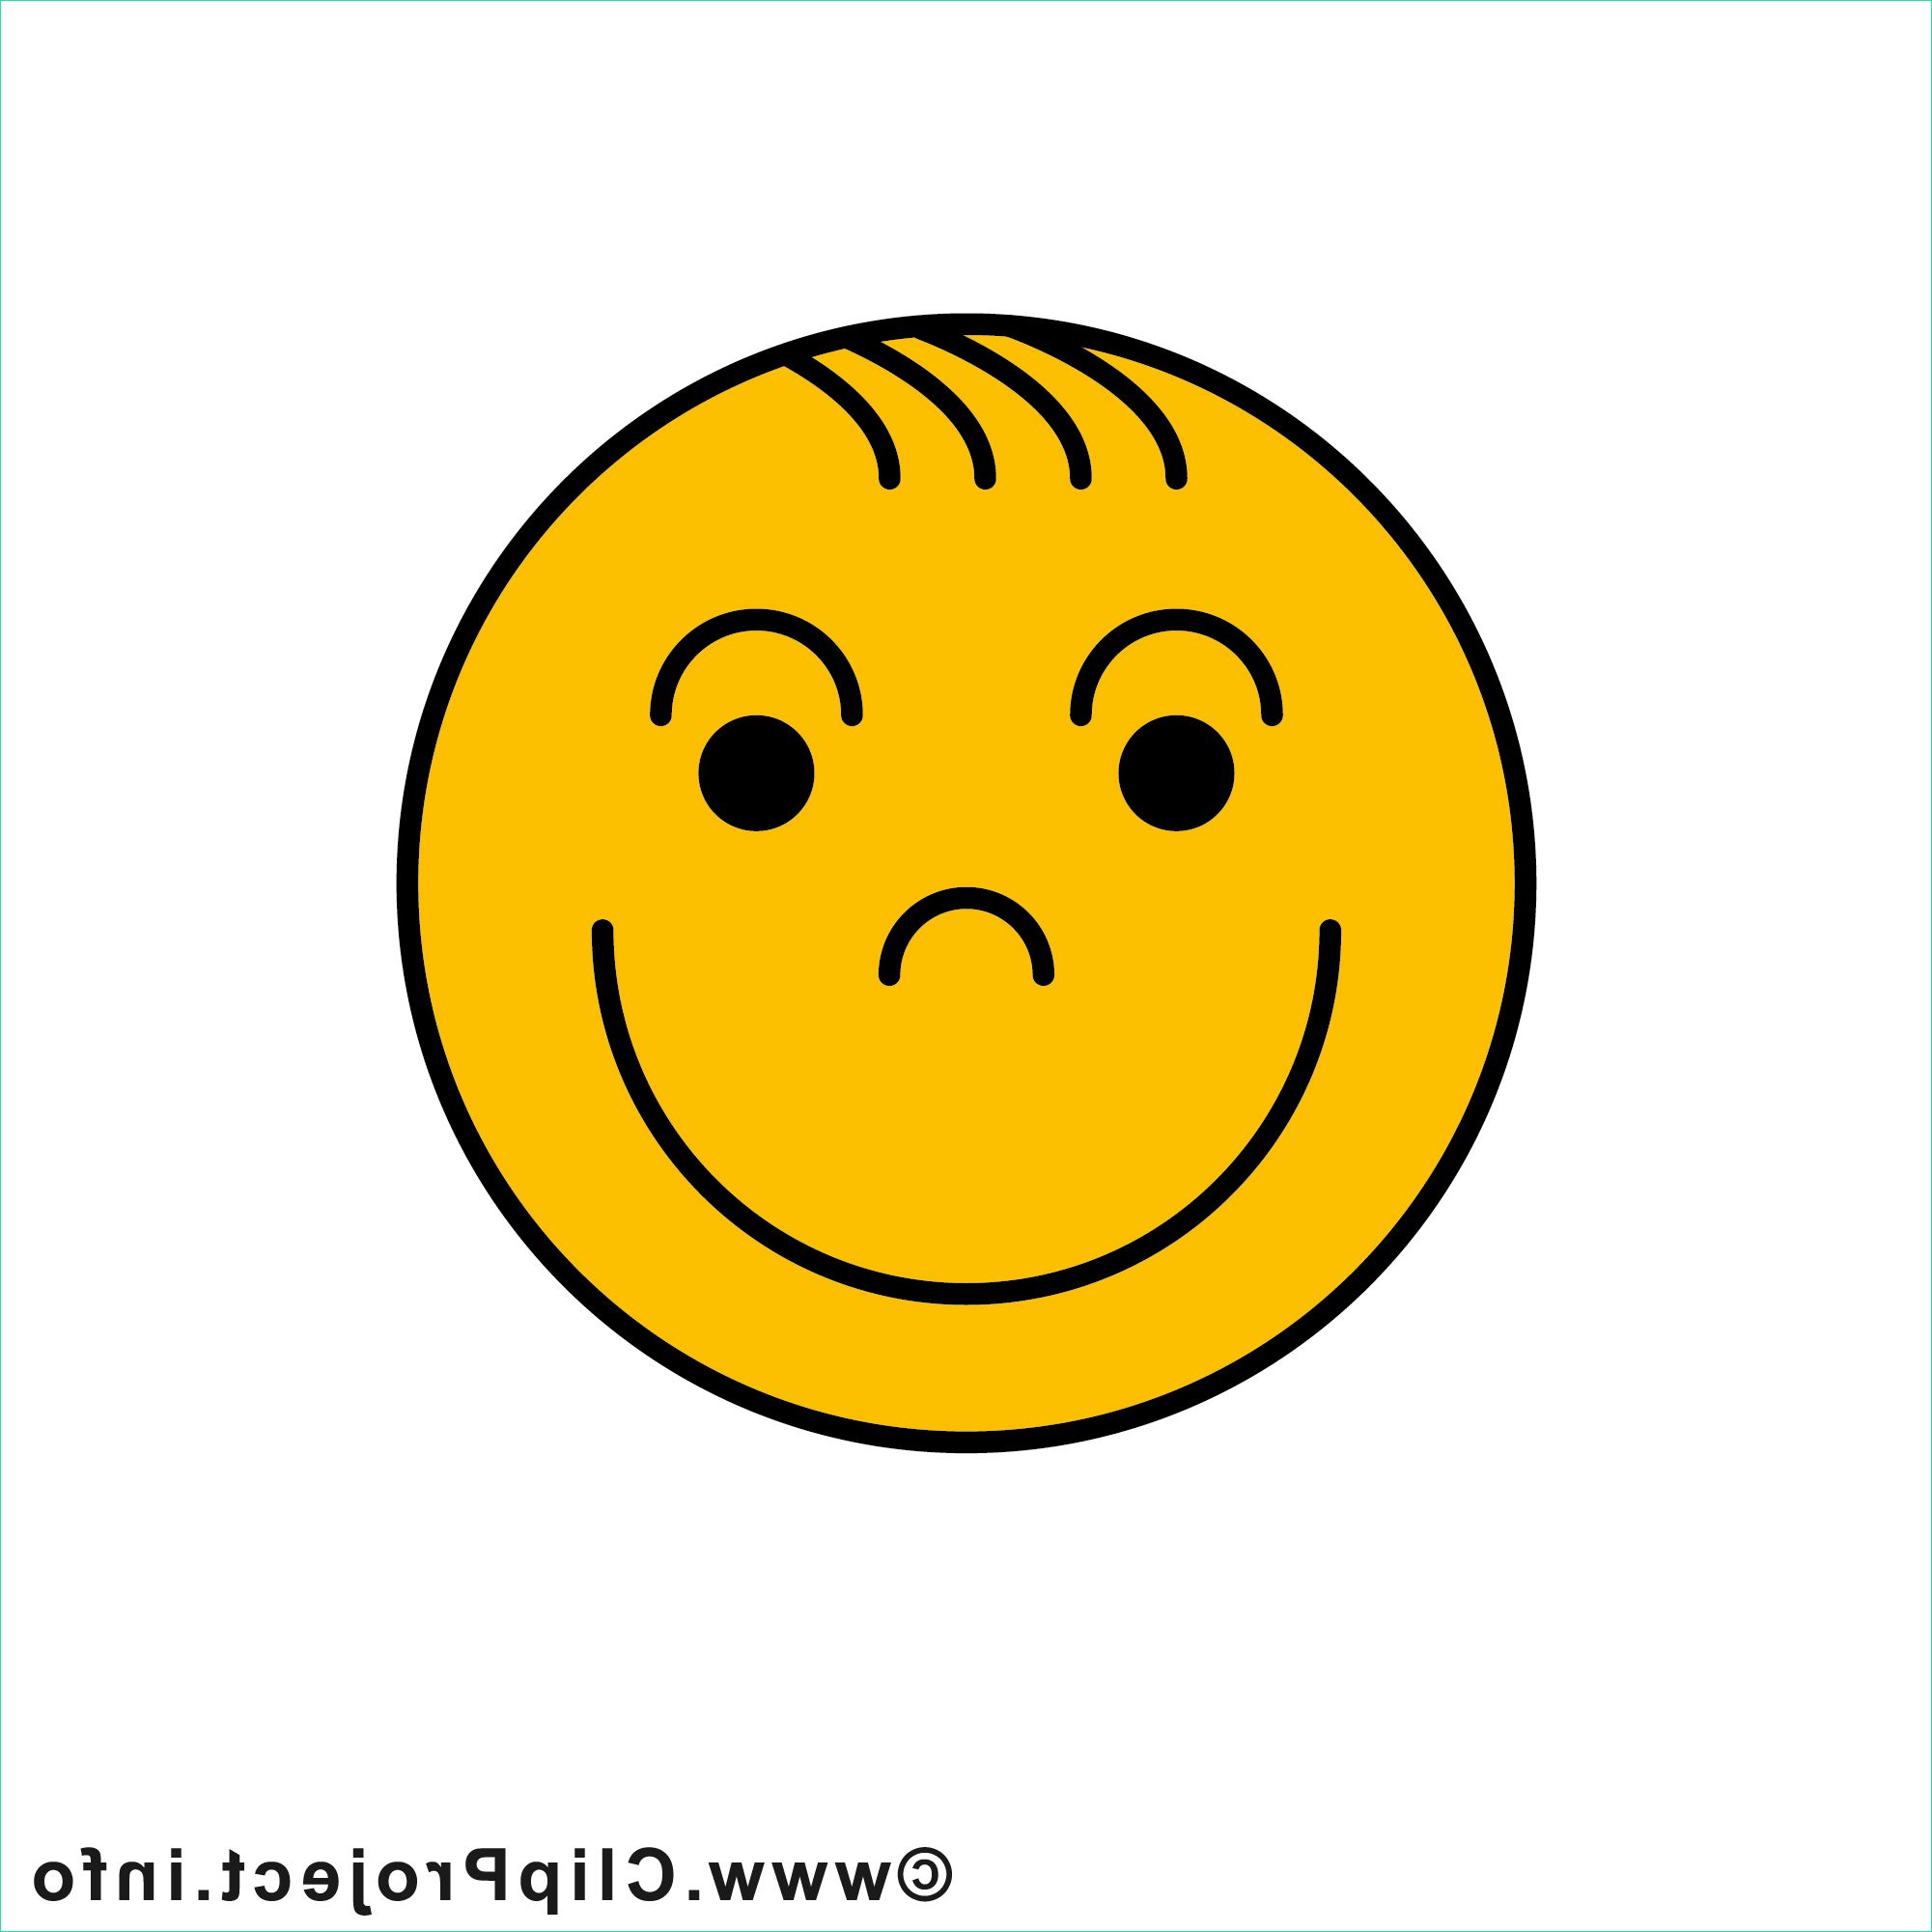 Dessin Smiley Beau Collection Émoticône sourire Illustration Gratuite Smileys Dessin